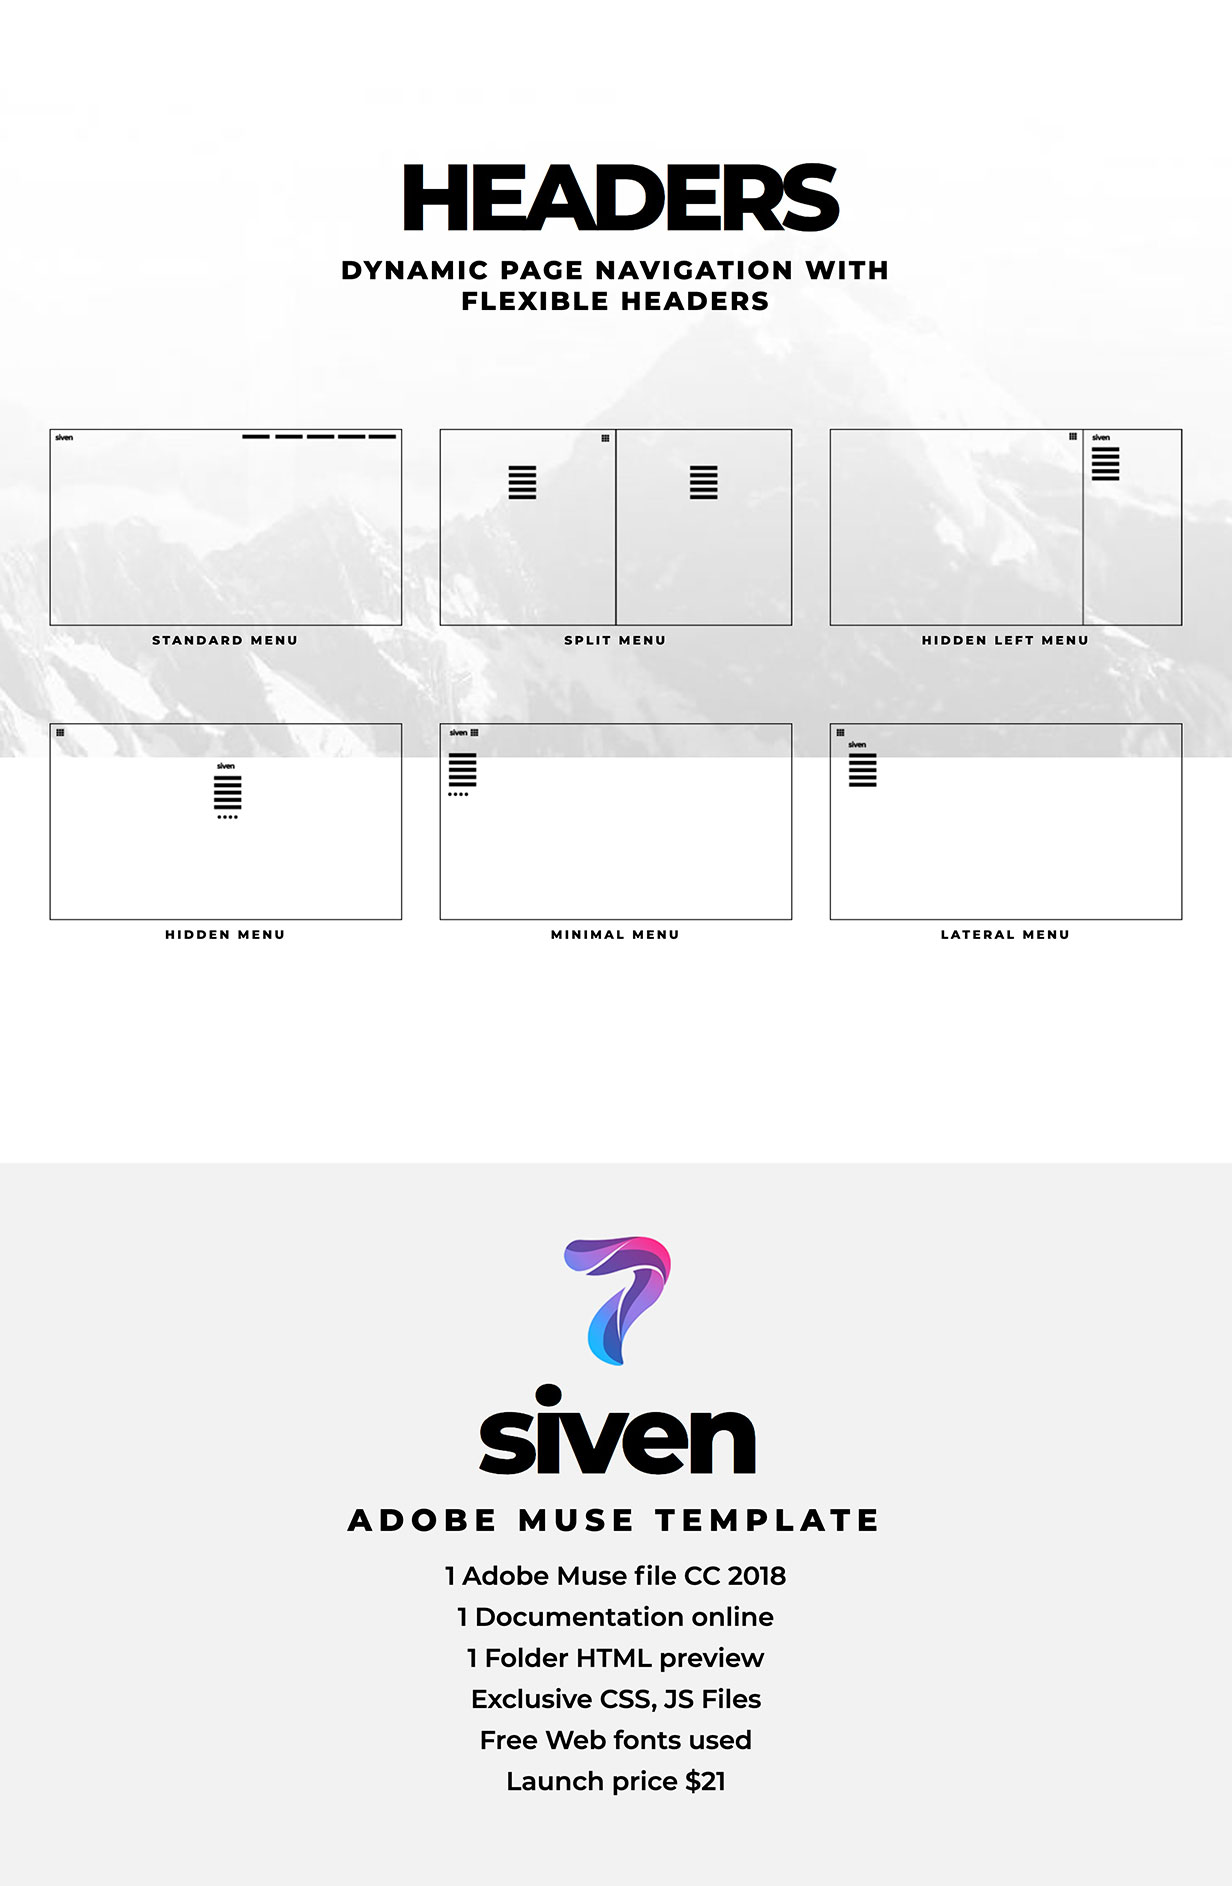 Siven - Adobe Muse Template - 4